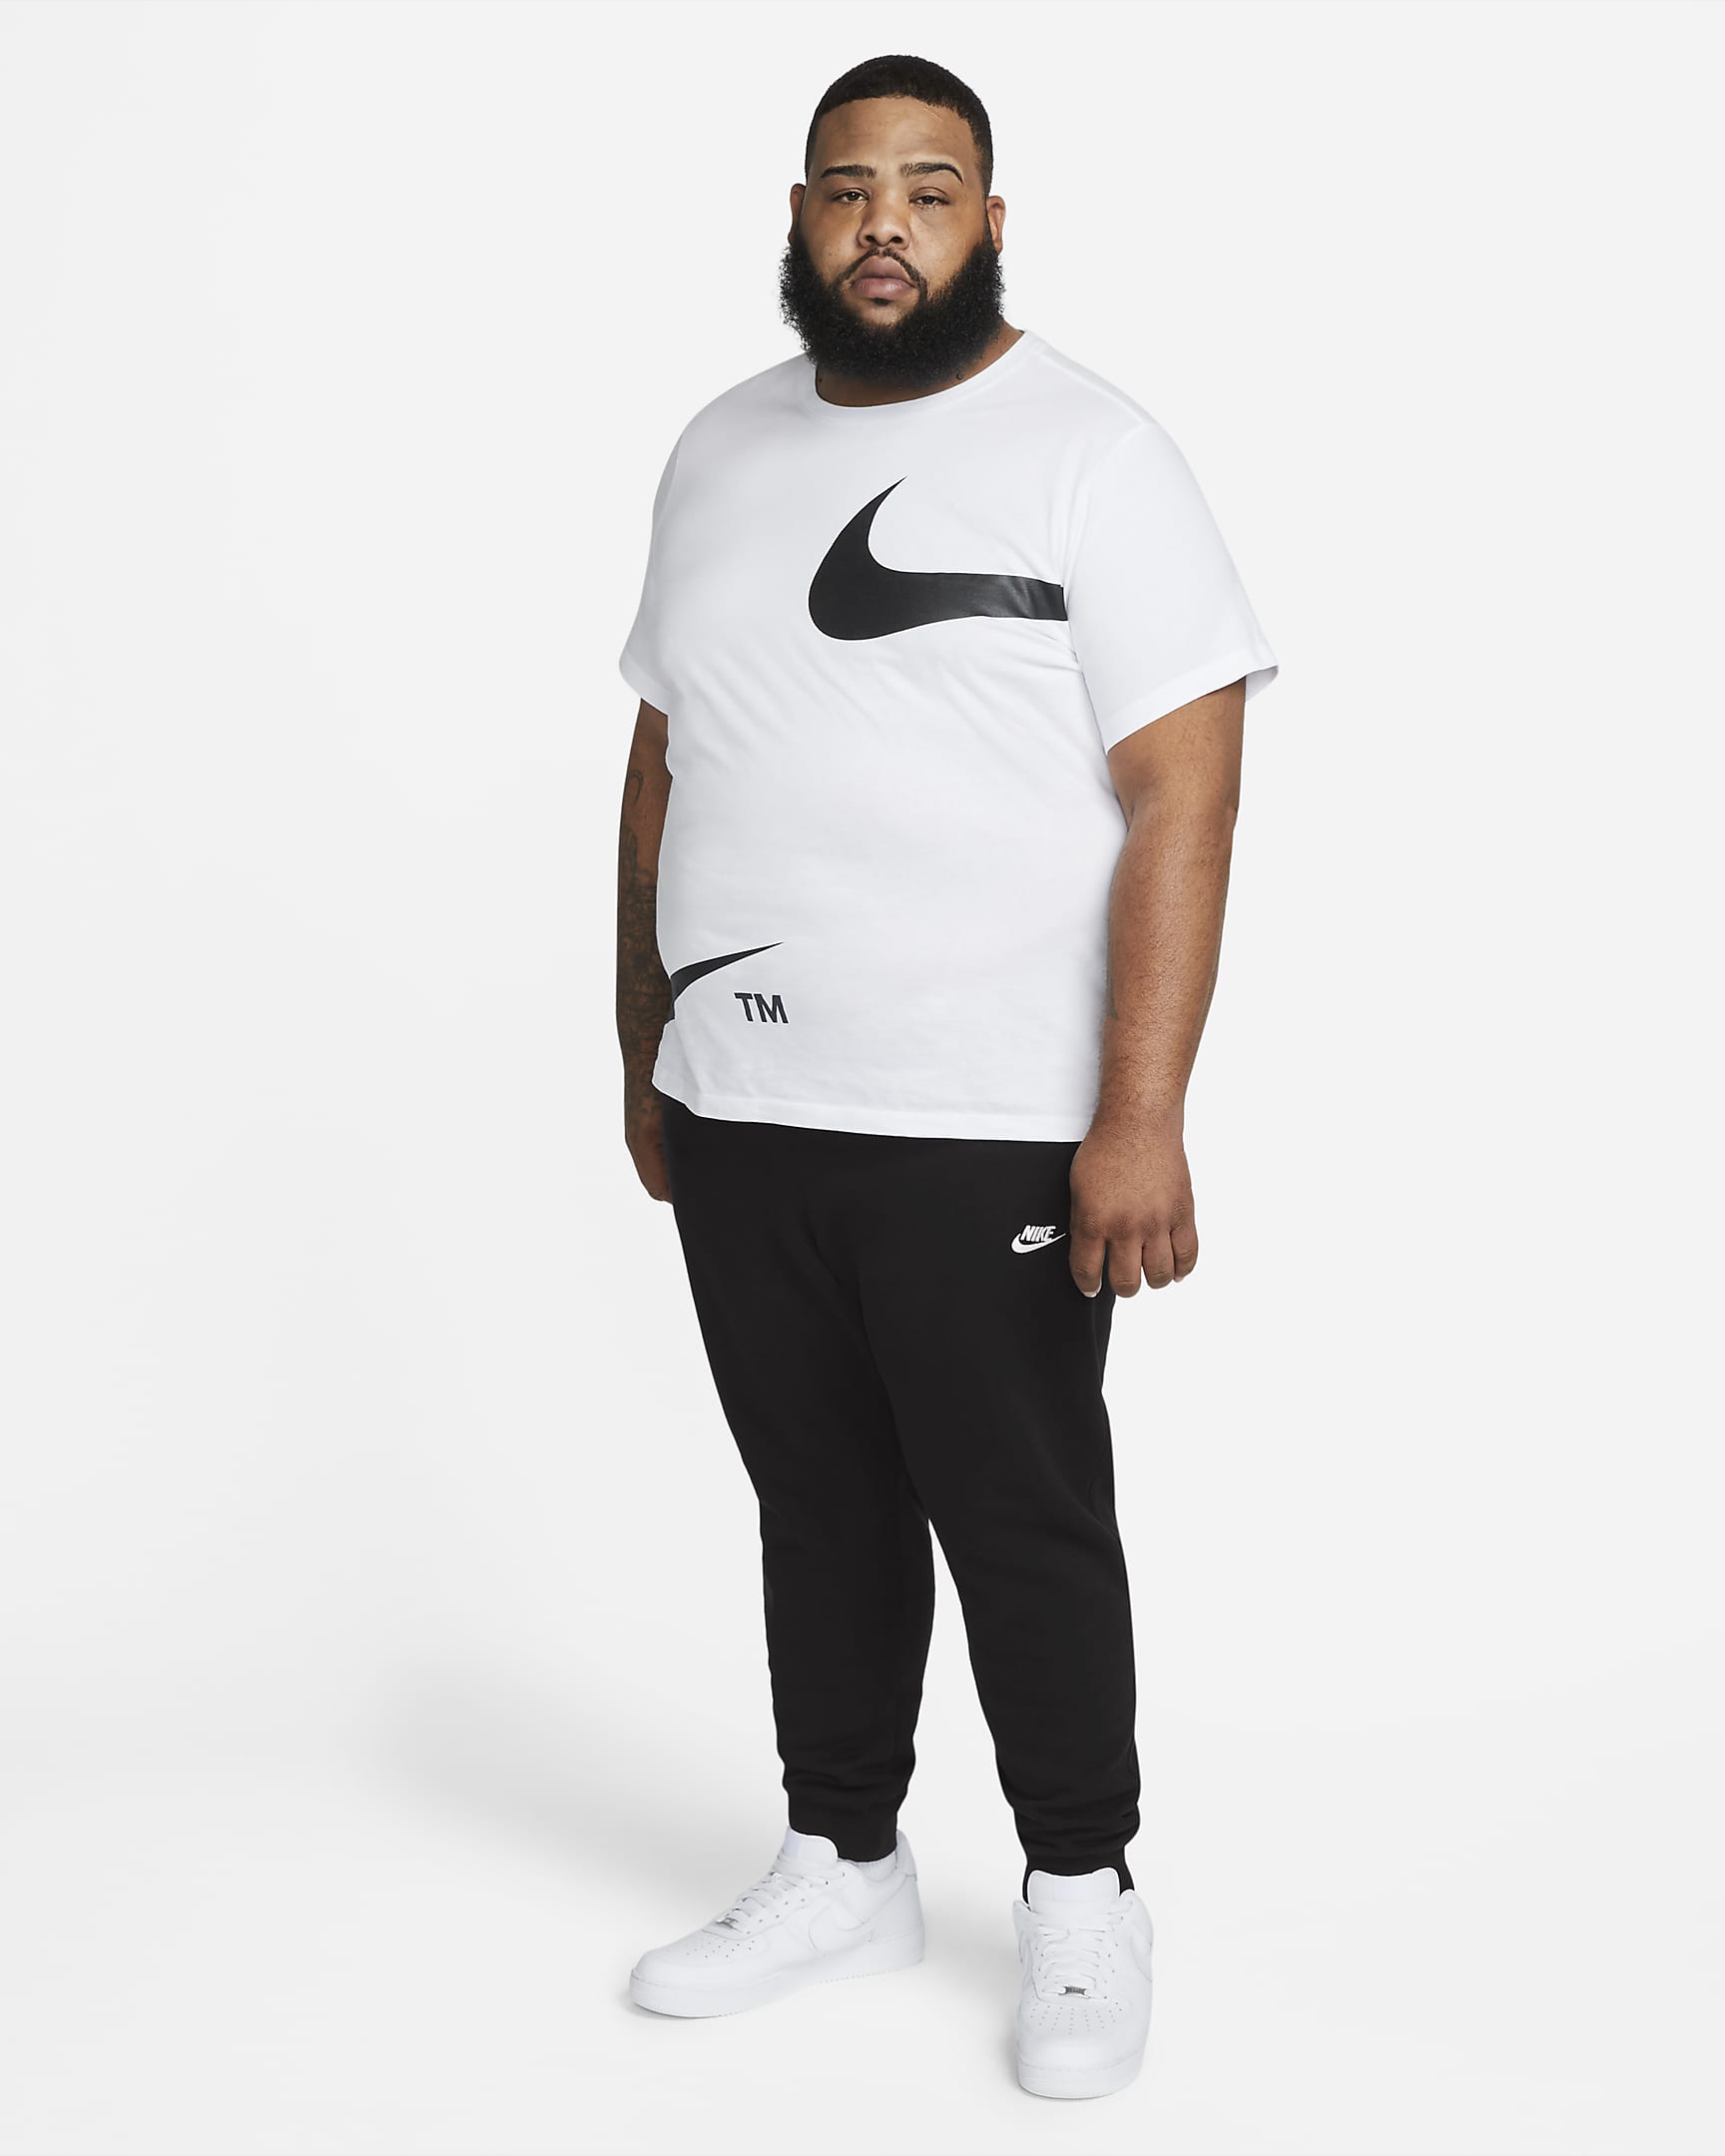 Nike Sportswear Club Fleece Joggers - Black/Black/White